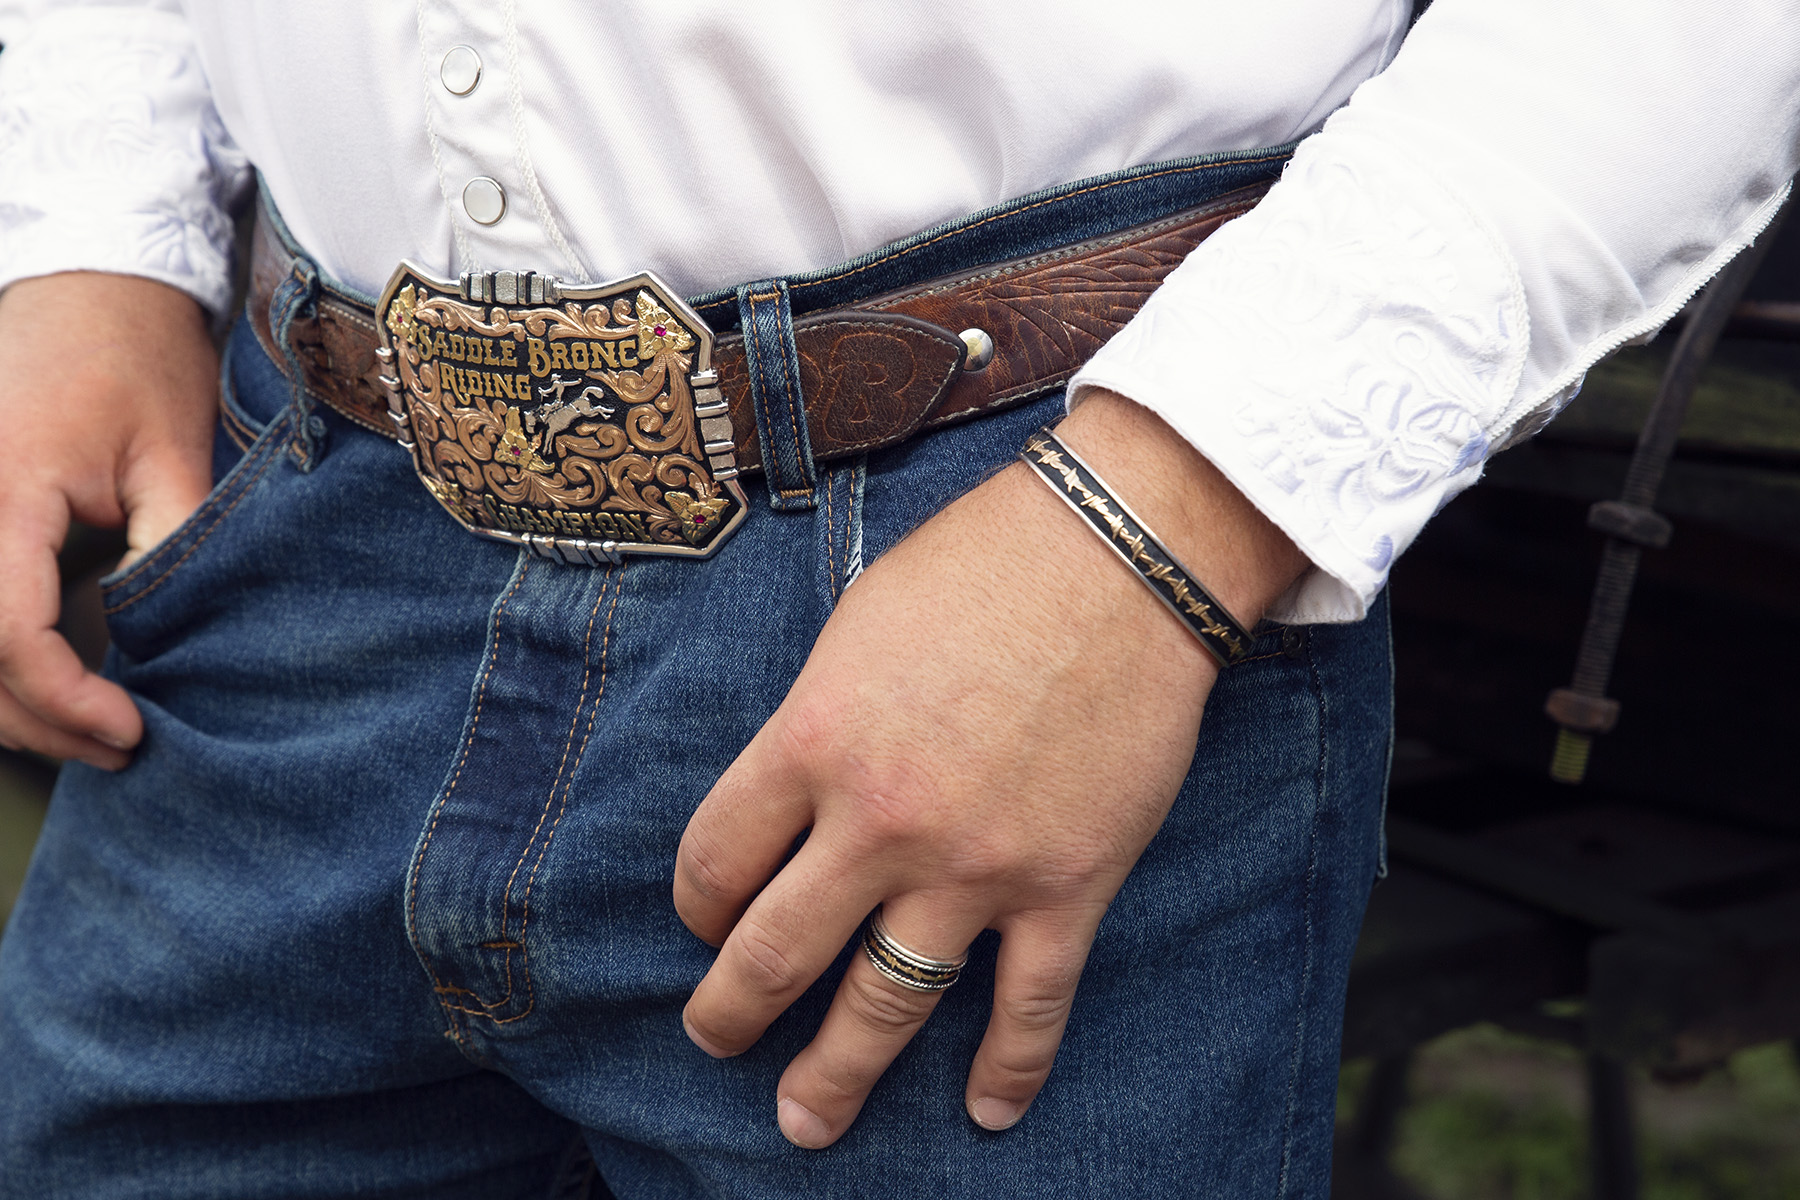 A Texas belt buckle in New York